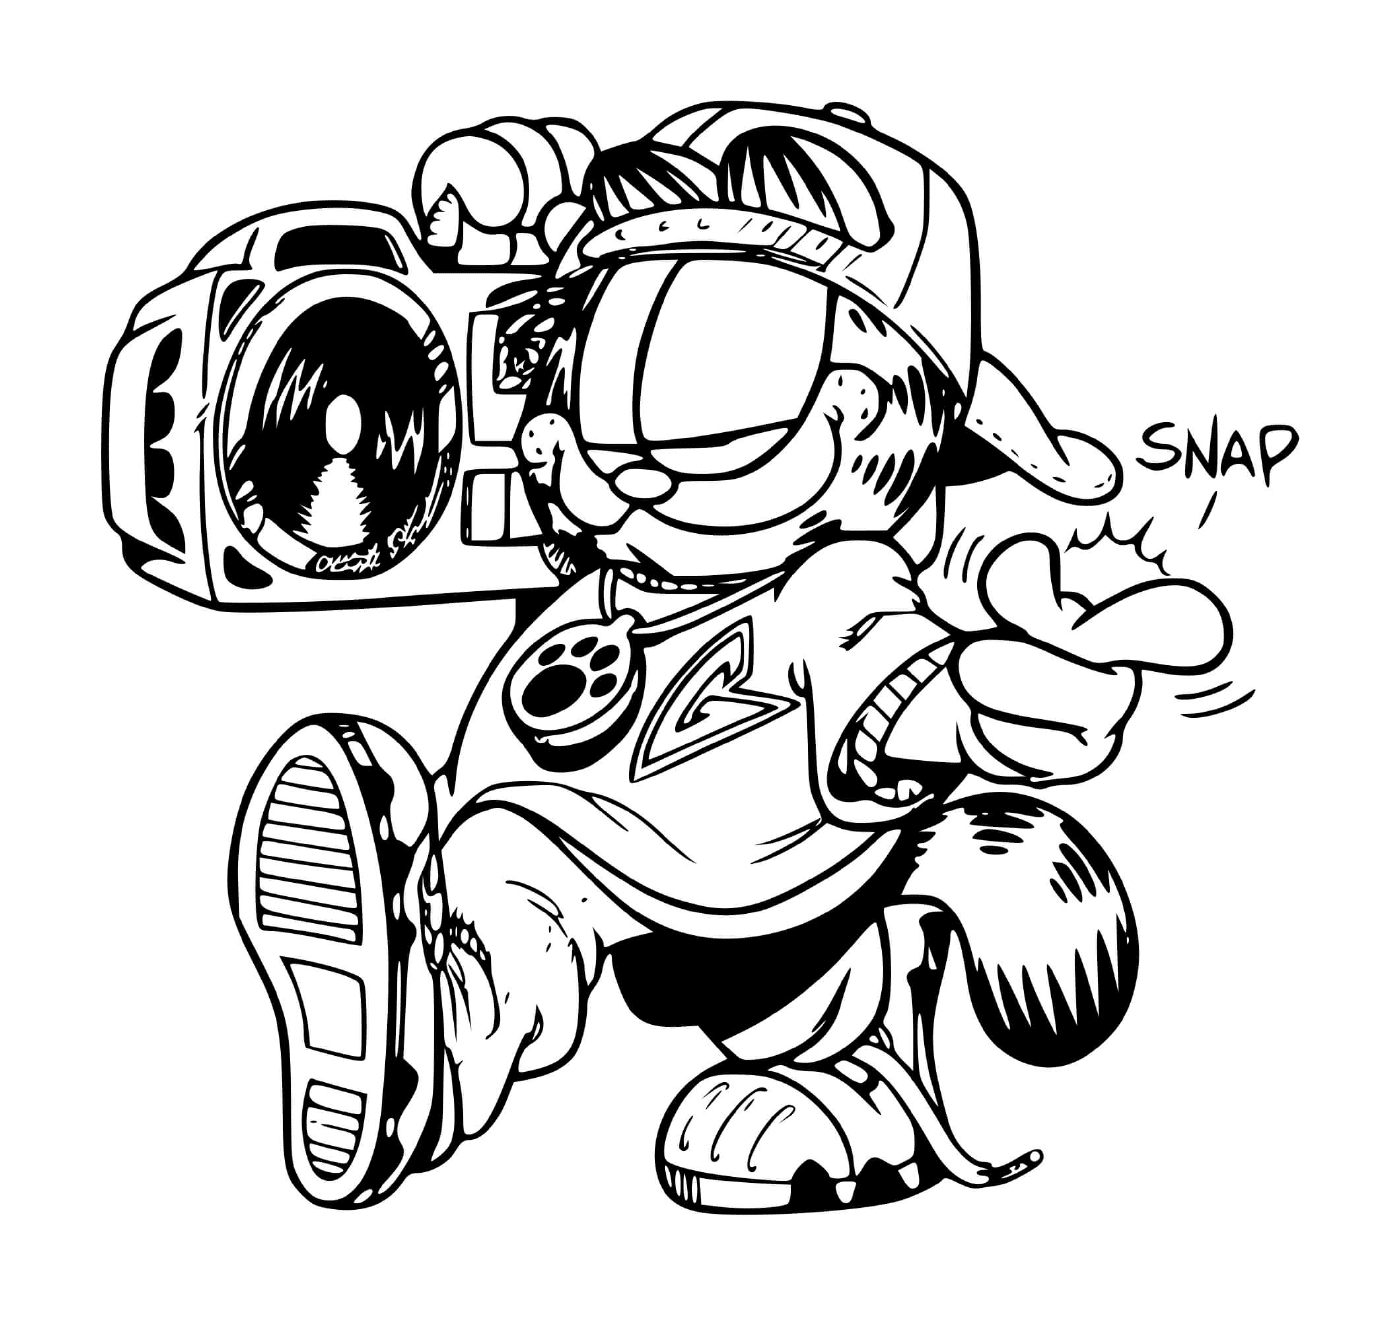  Garfield as a rapper listening to music 